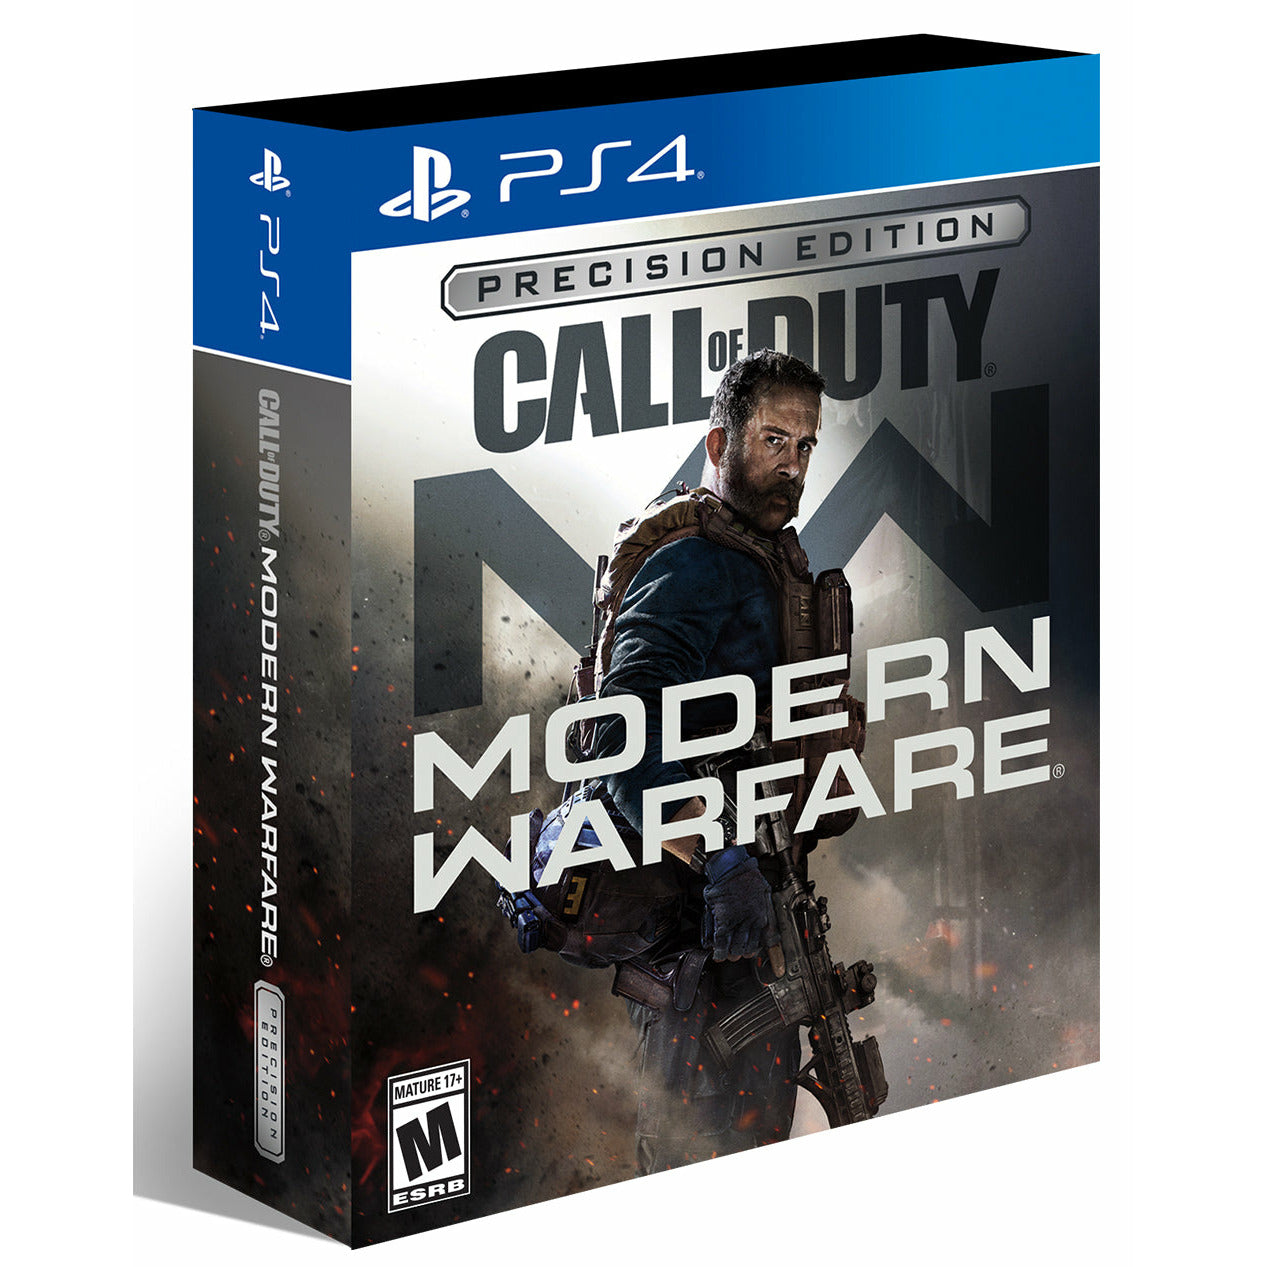 PS4 - Call of Duty Modern Warfare Precision Edition (Sealed)